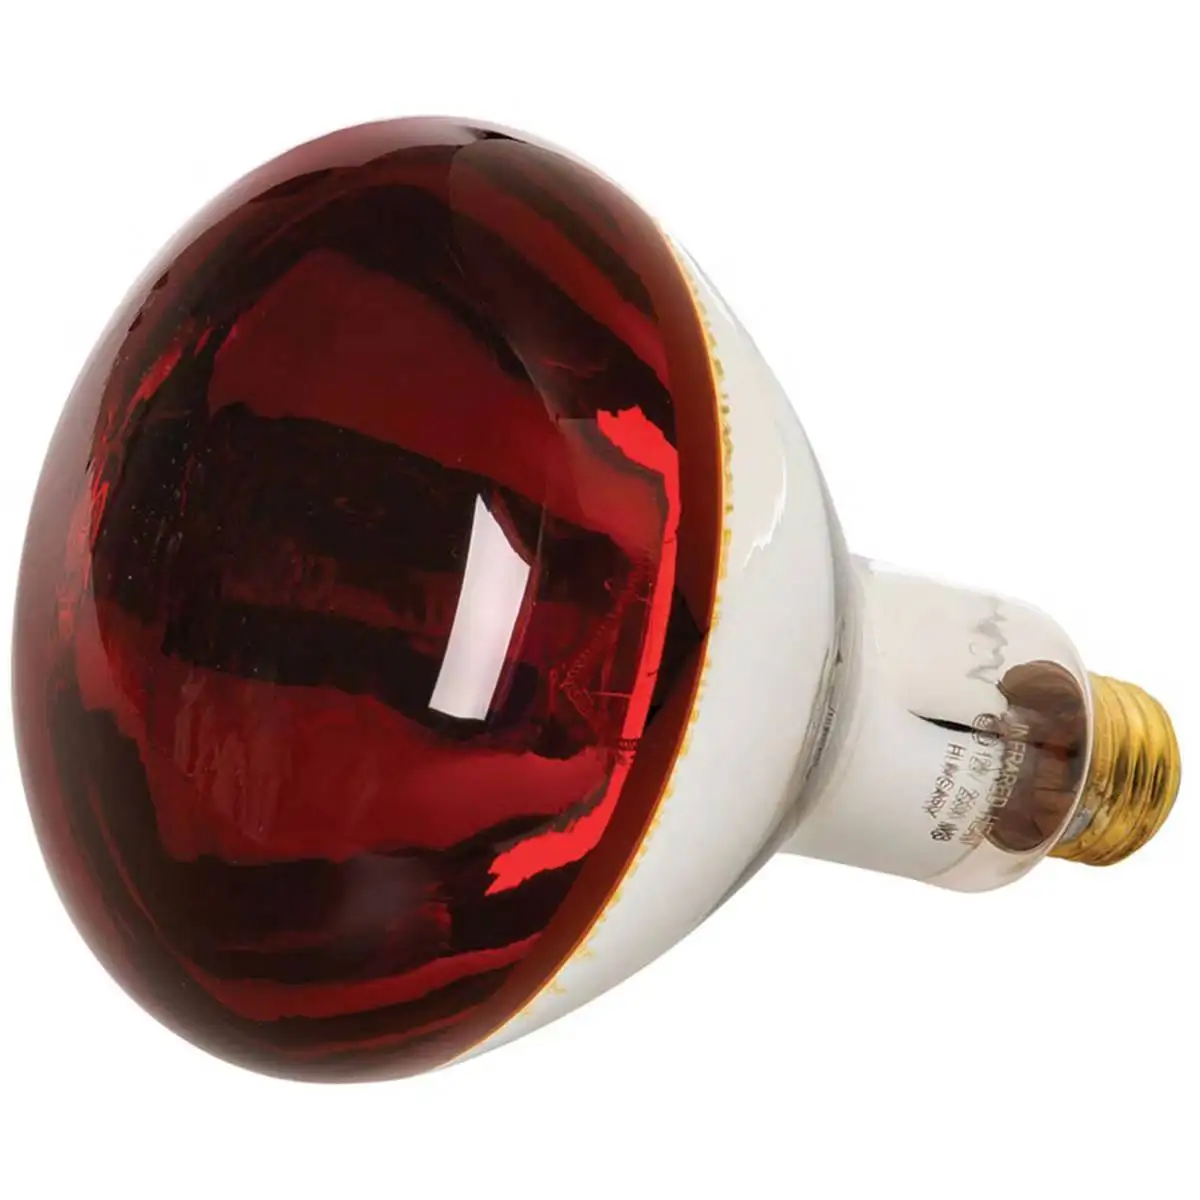 Лампочка для обогрева. Лампа инфракрасная FL-ir r125 250w Red e27 230v красное стекло. Лампа инфракрасная Lightbest Erk r125 175w. Инфракрасная лампа 150 Вт. Инфракрасная лампа для обогрева брудера 175 ватт.